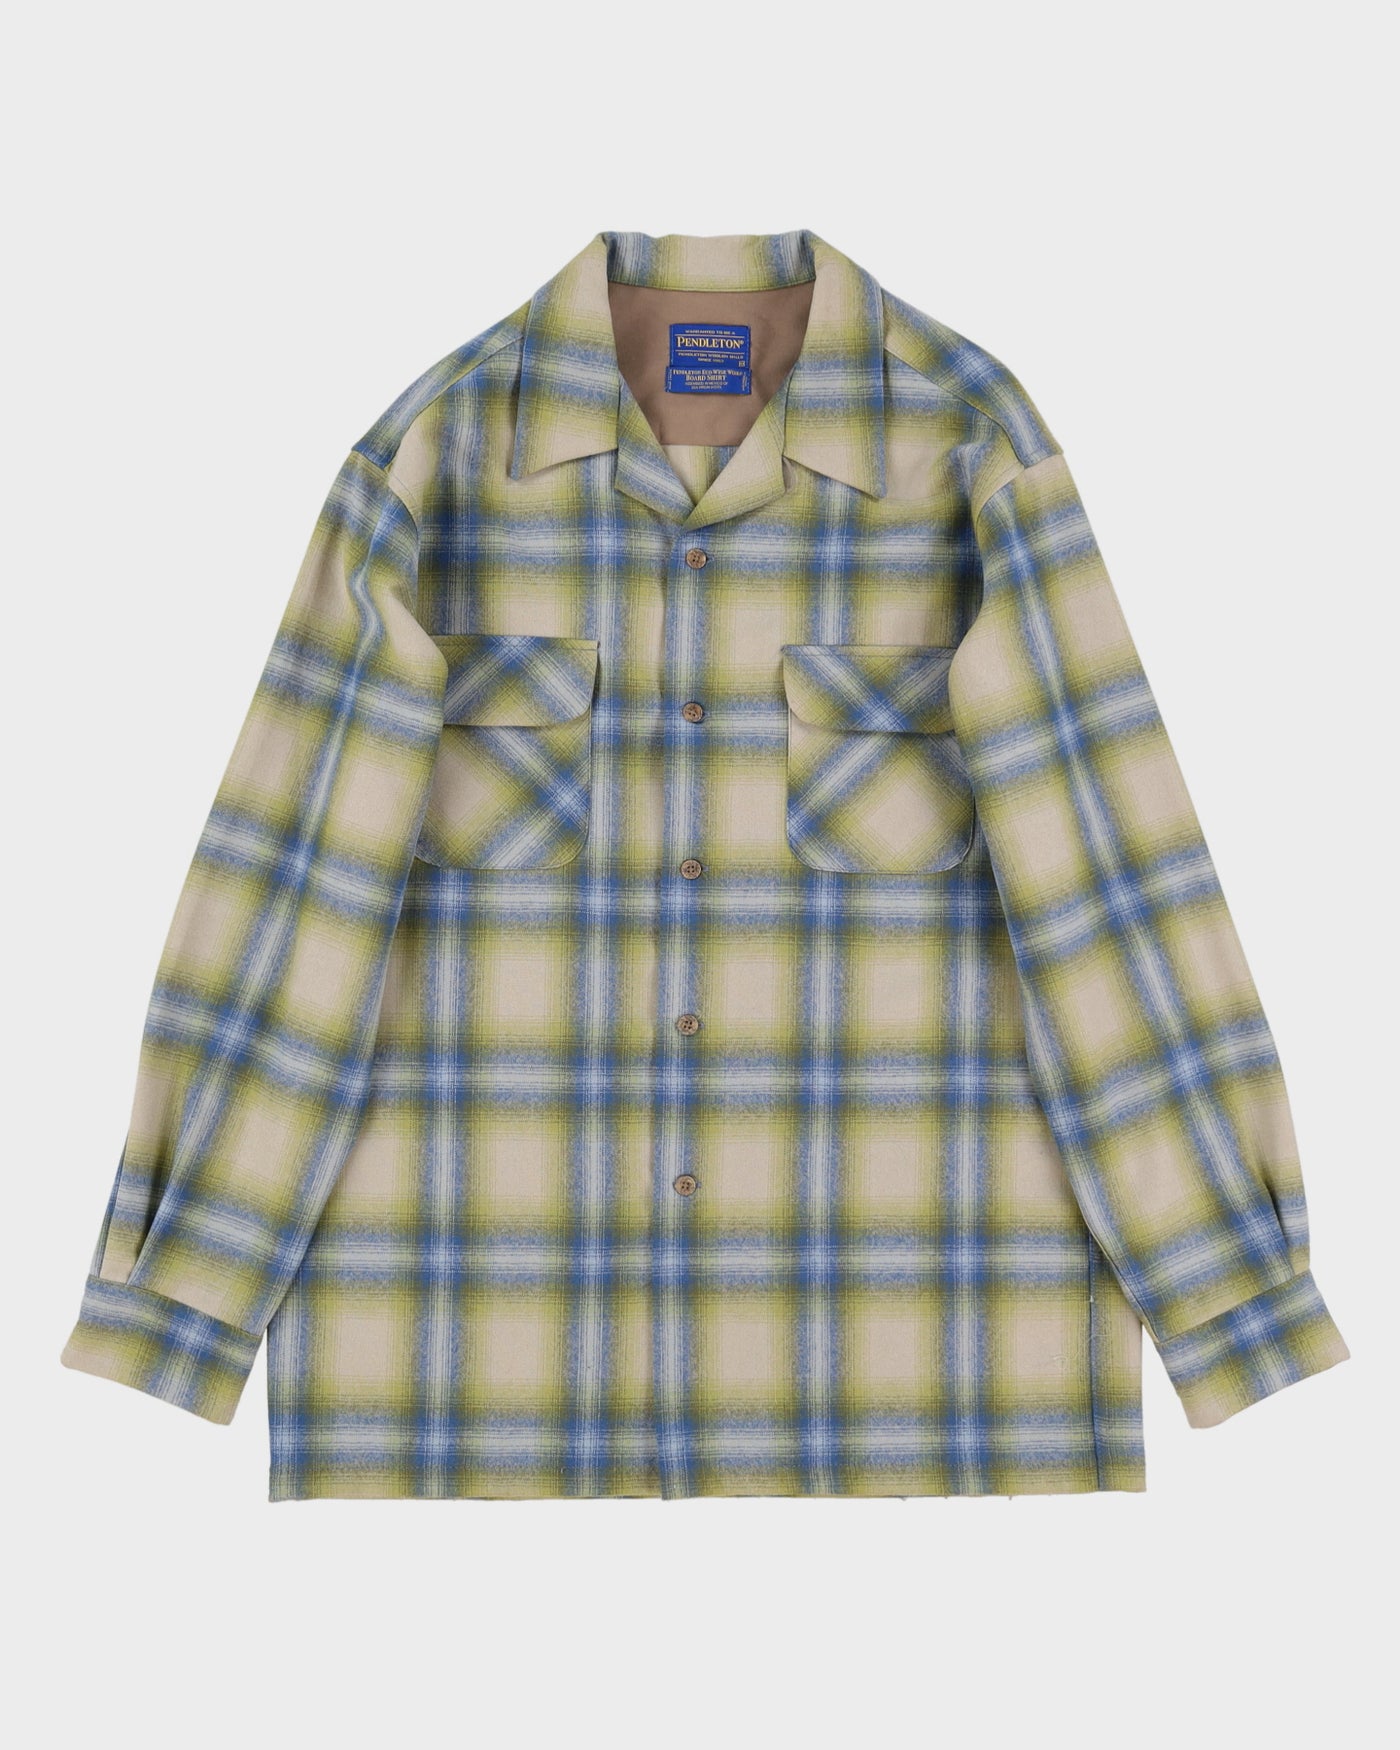 Pendleton Green Checked Wool Board Shirt - M / L